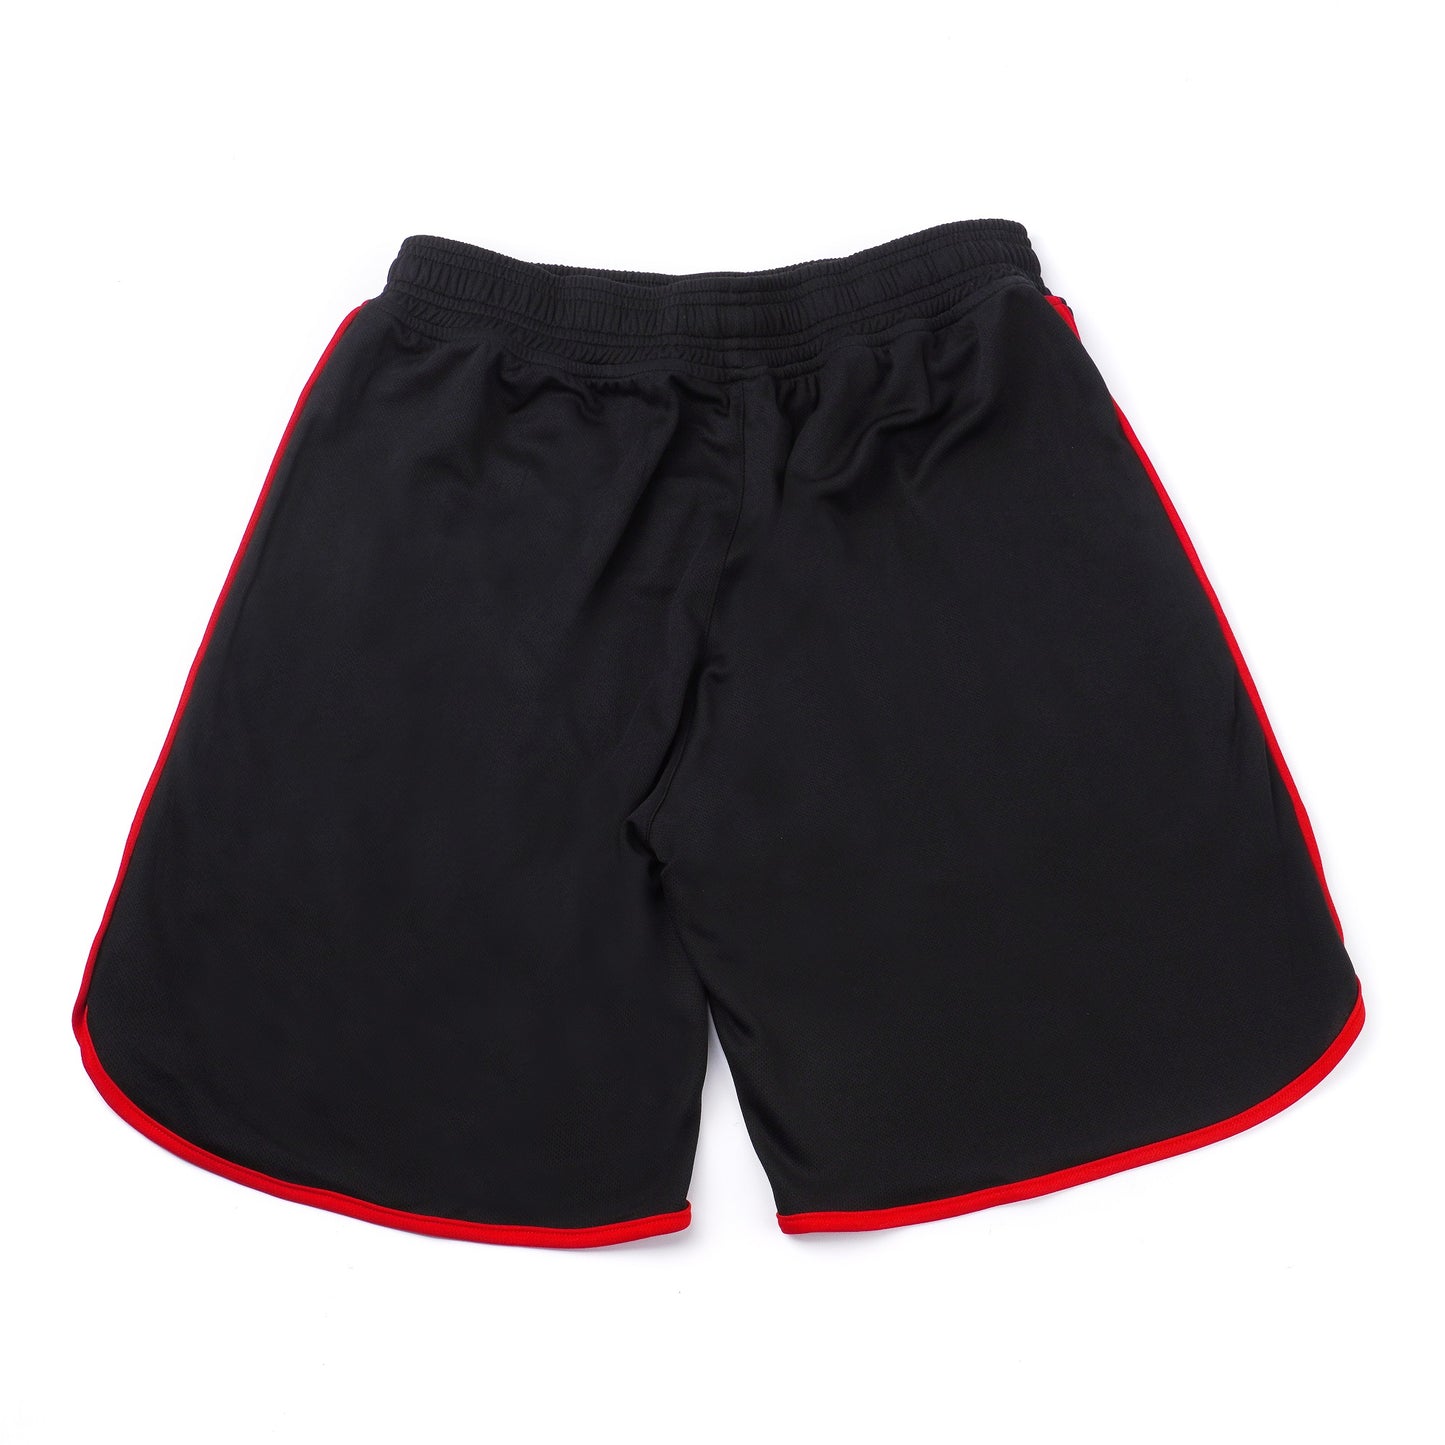 AZA Basketball Icon Shorts - Black/Red